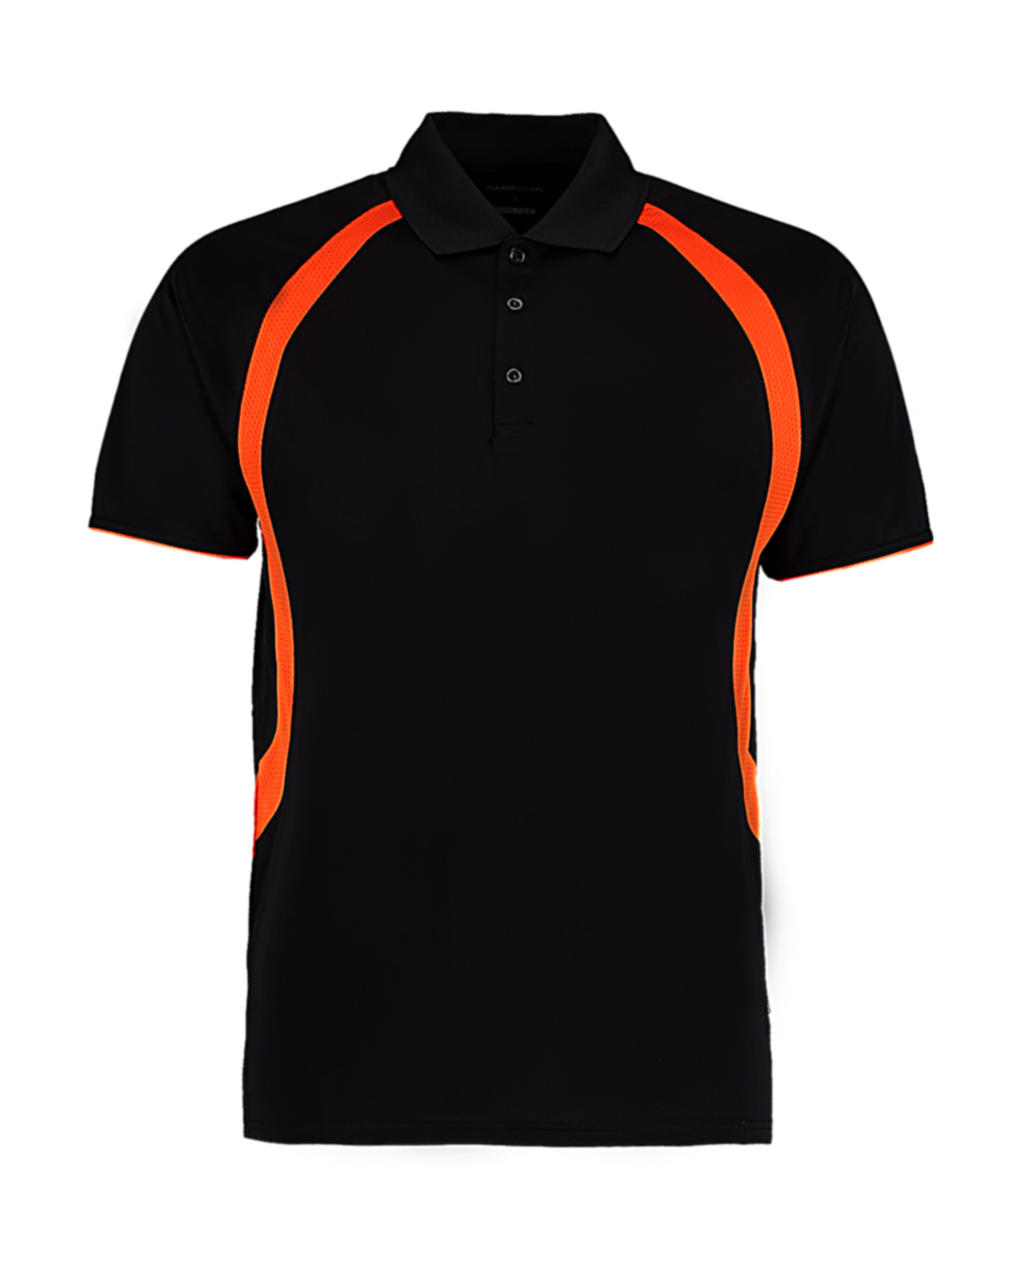 550.11 / Classic Fit Cooltex® Riviera Polo Shirt / Black/Orange